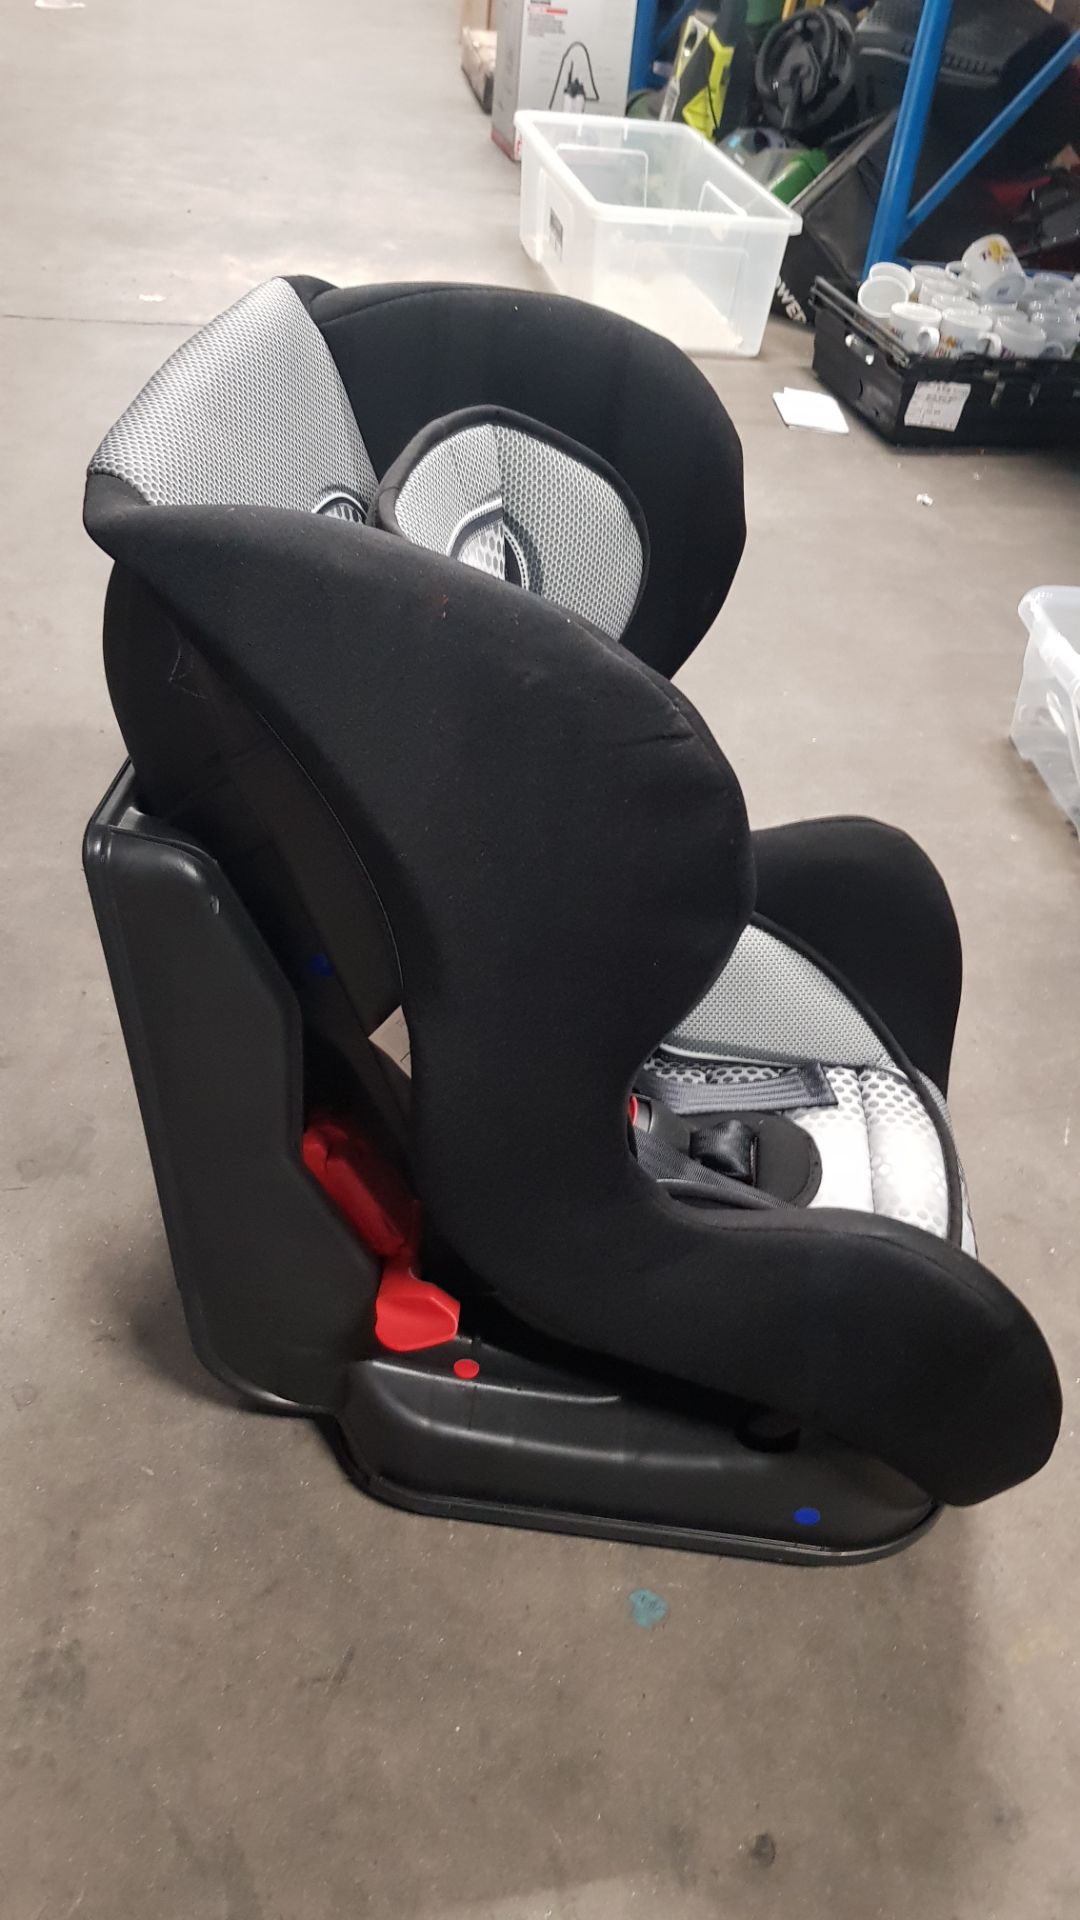 Description: (6/6J) 2x Nania Baby Car Seats To Include 1x Nania Revo Sp 0-18kg 360 Swivel Car Seat - Image 10 of 15